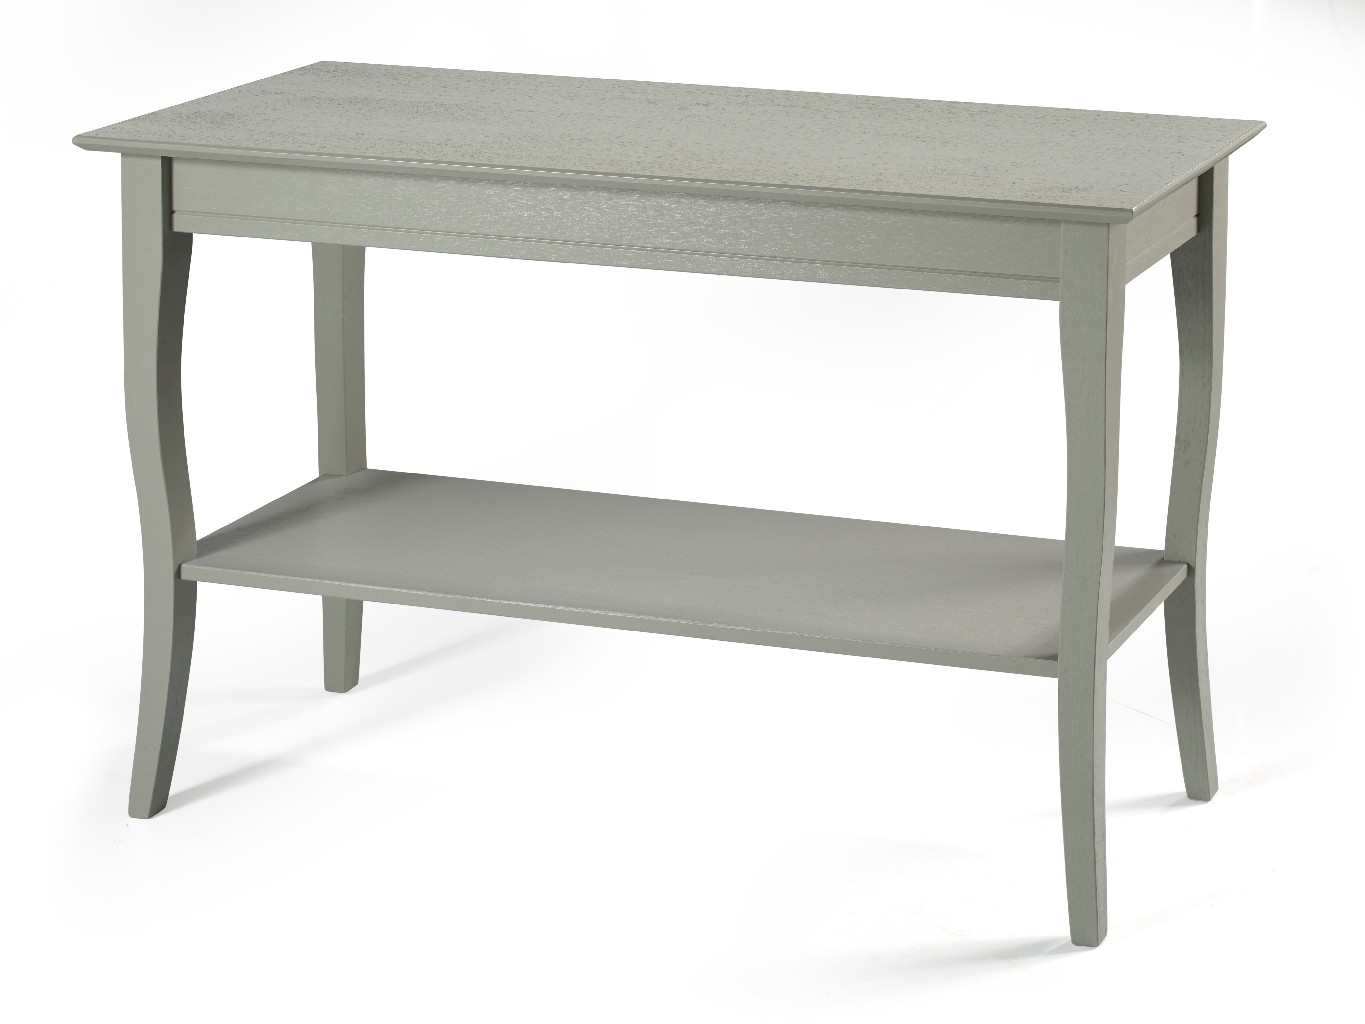 Dayton Console Table In Grey - Linon Dy03gry01u